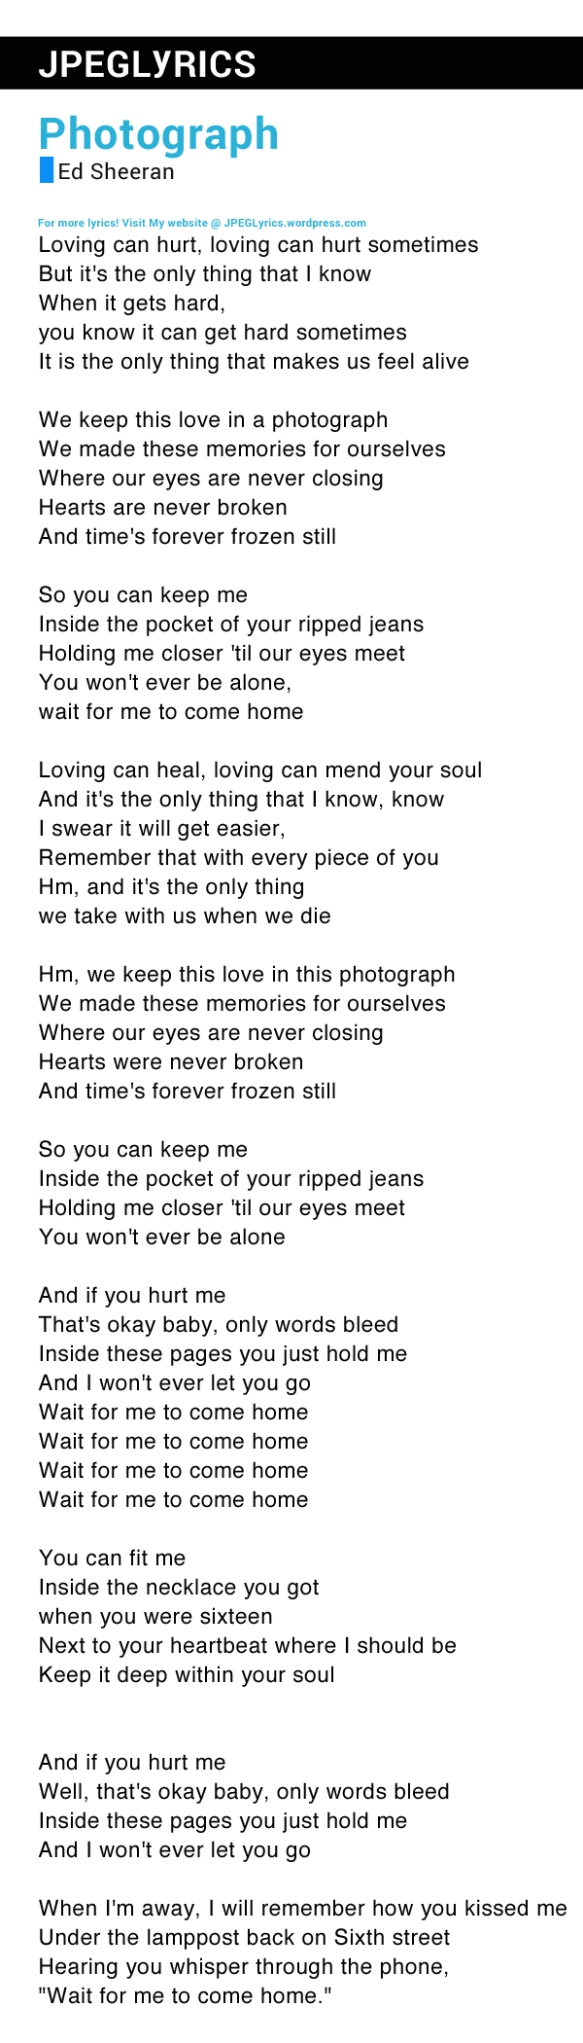 photograph lyrics ed sheeran